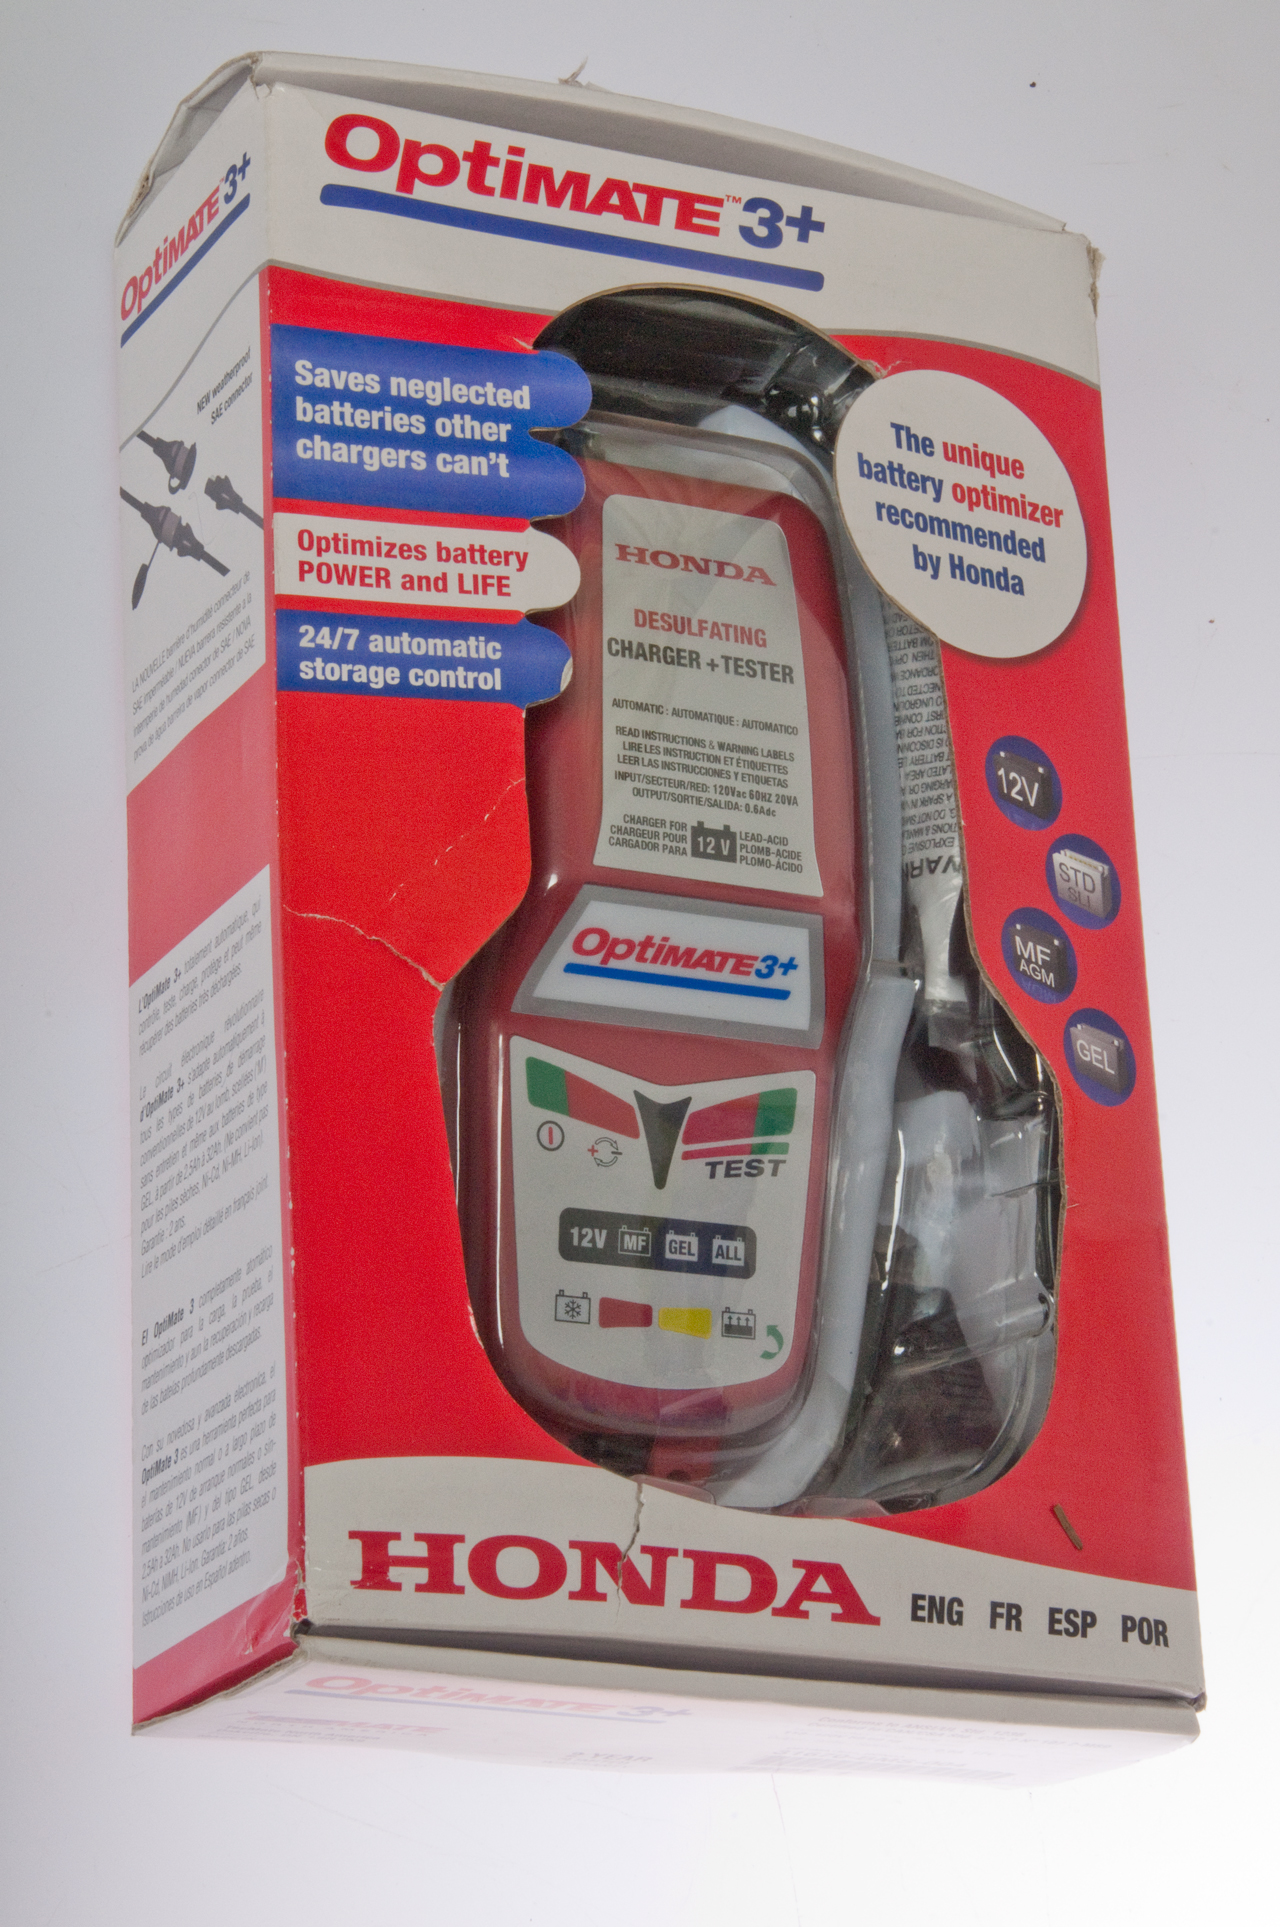 Honda optimate 3 charger